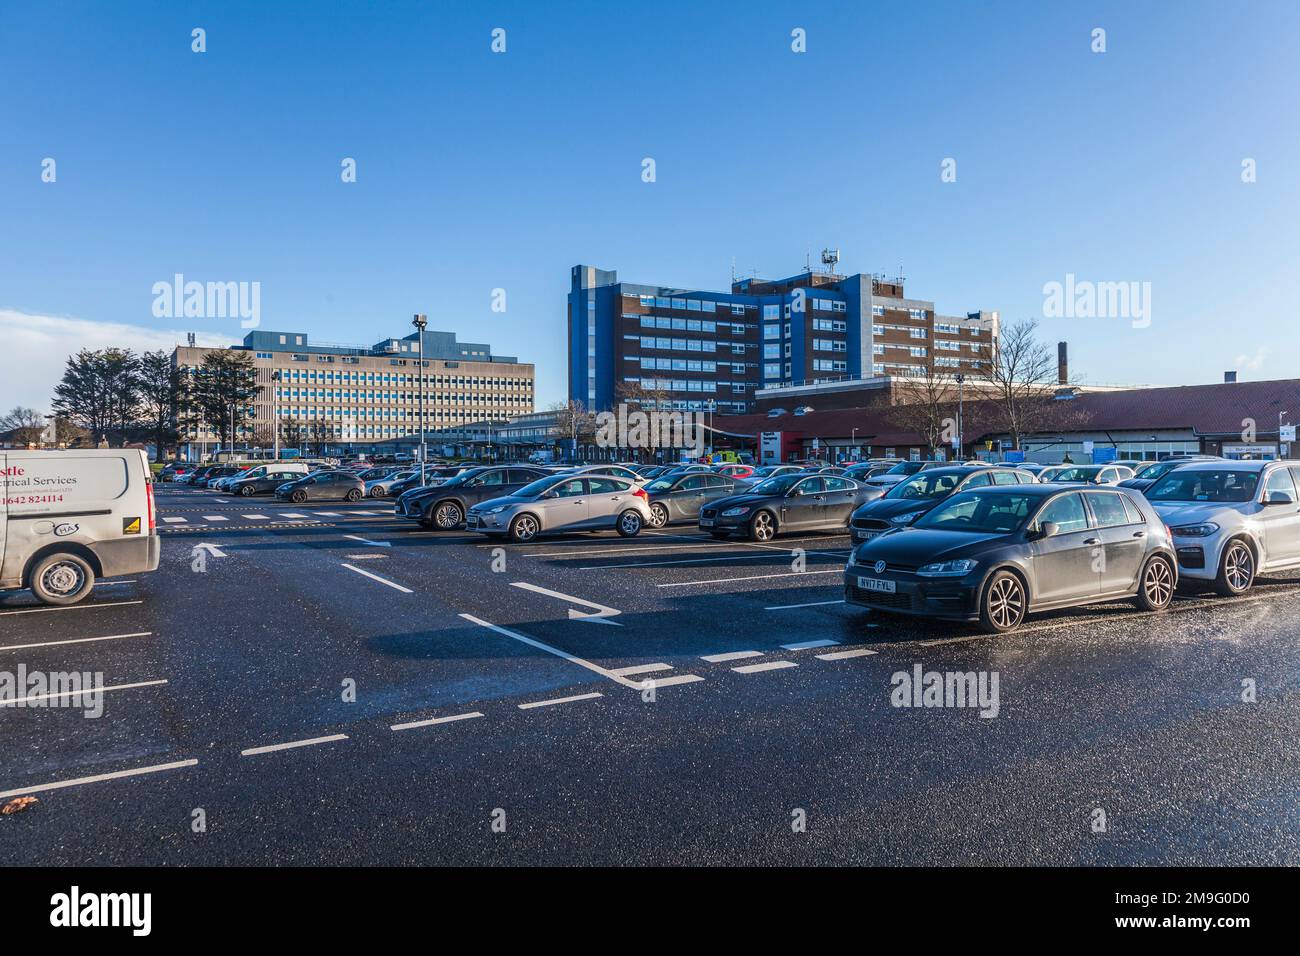 University Hospital of North Tees,Stockton on Tees,England,UK including car park Stock Photo